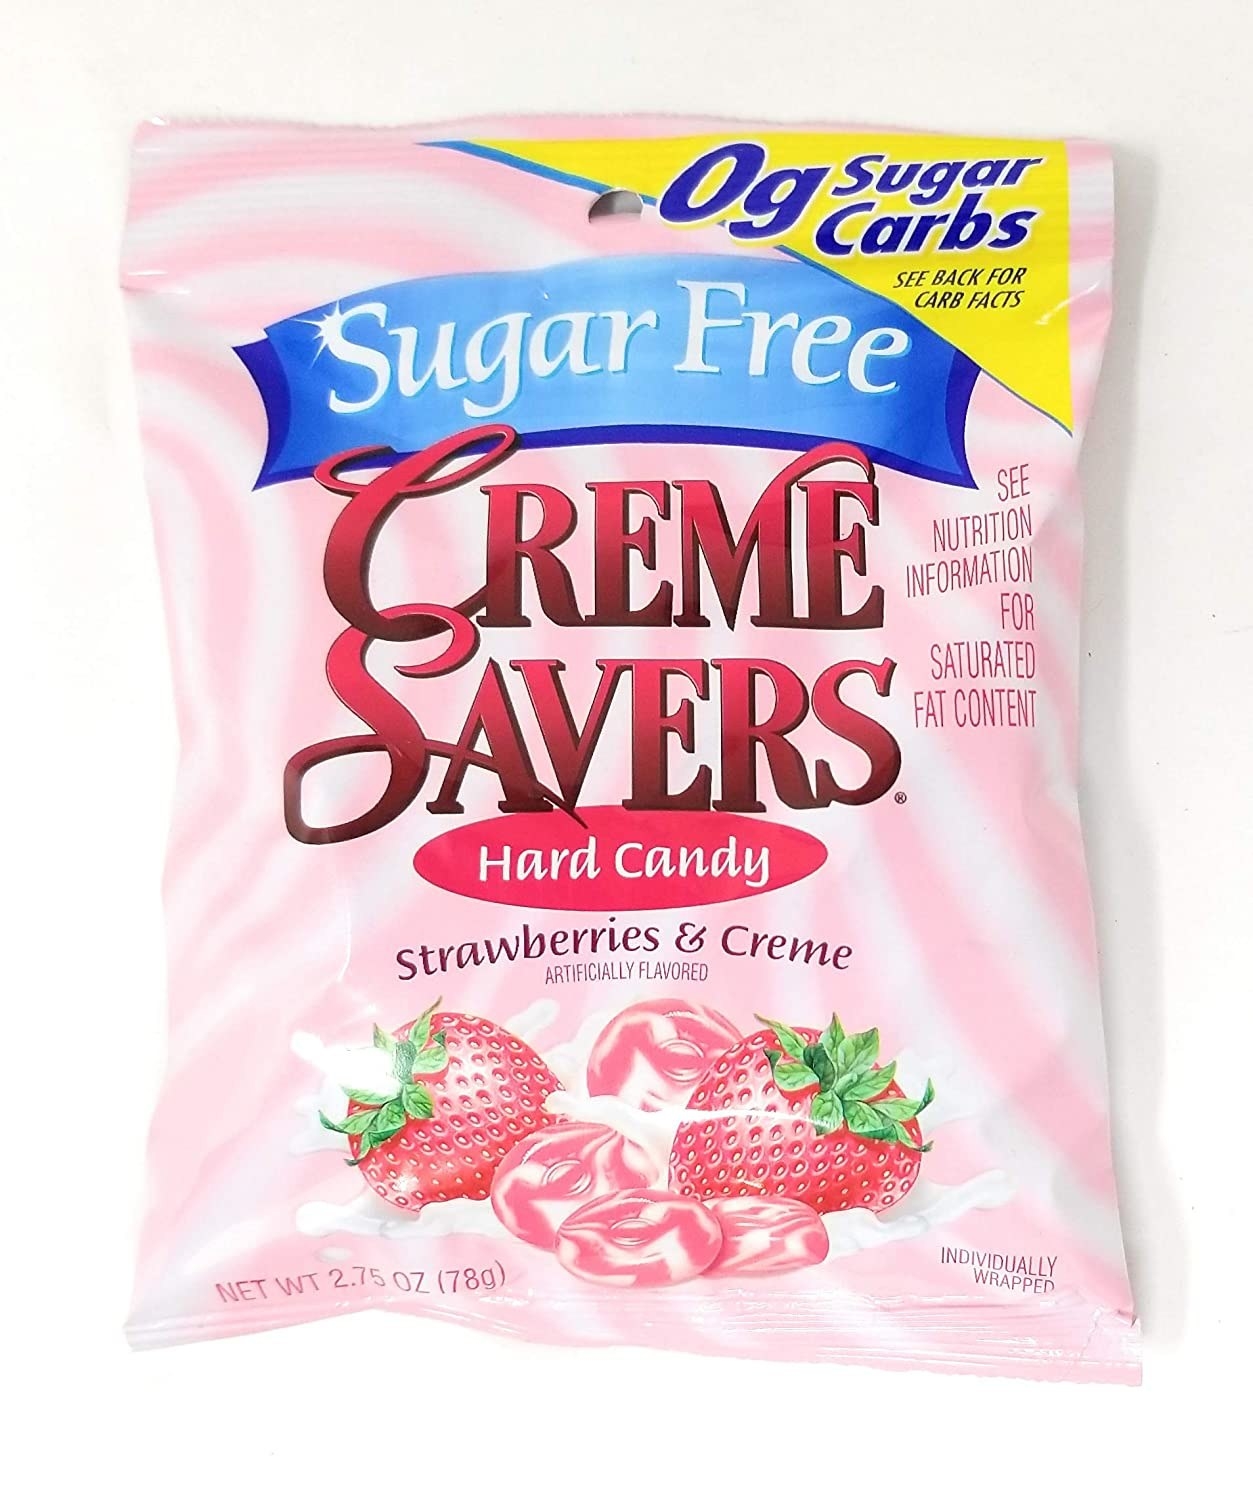 A bag of sugar-free strawberry and creme Creme Savers